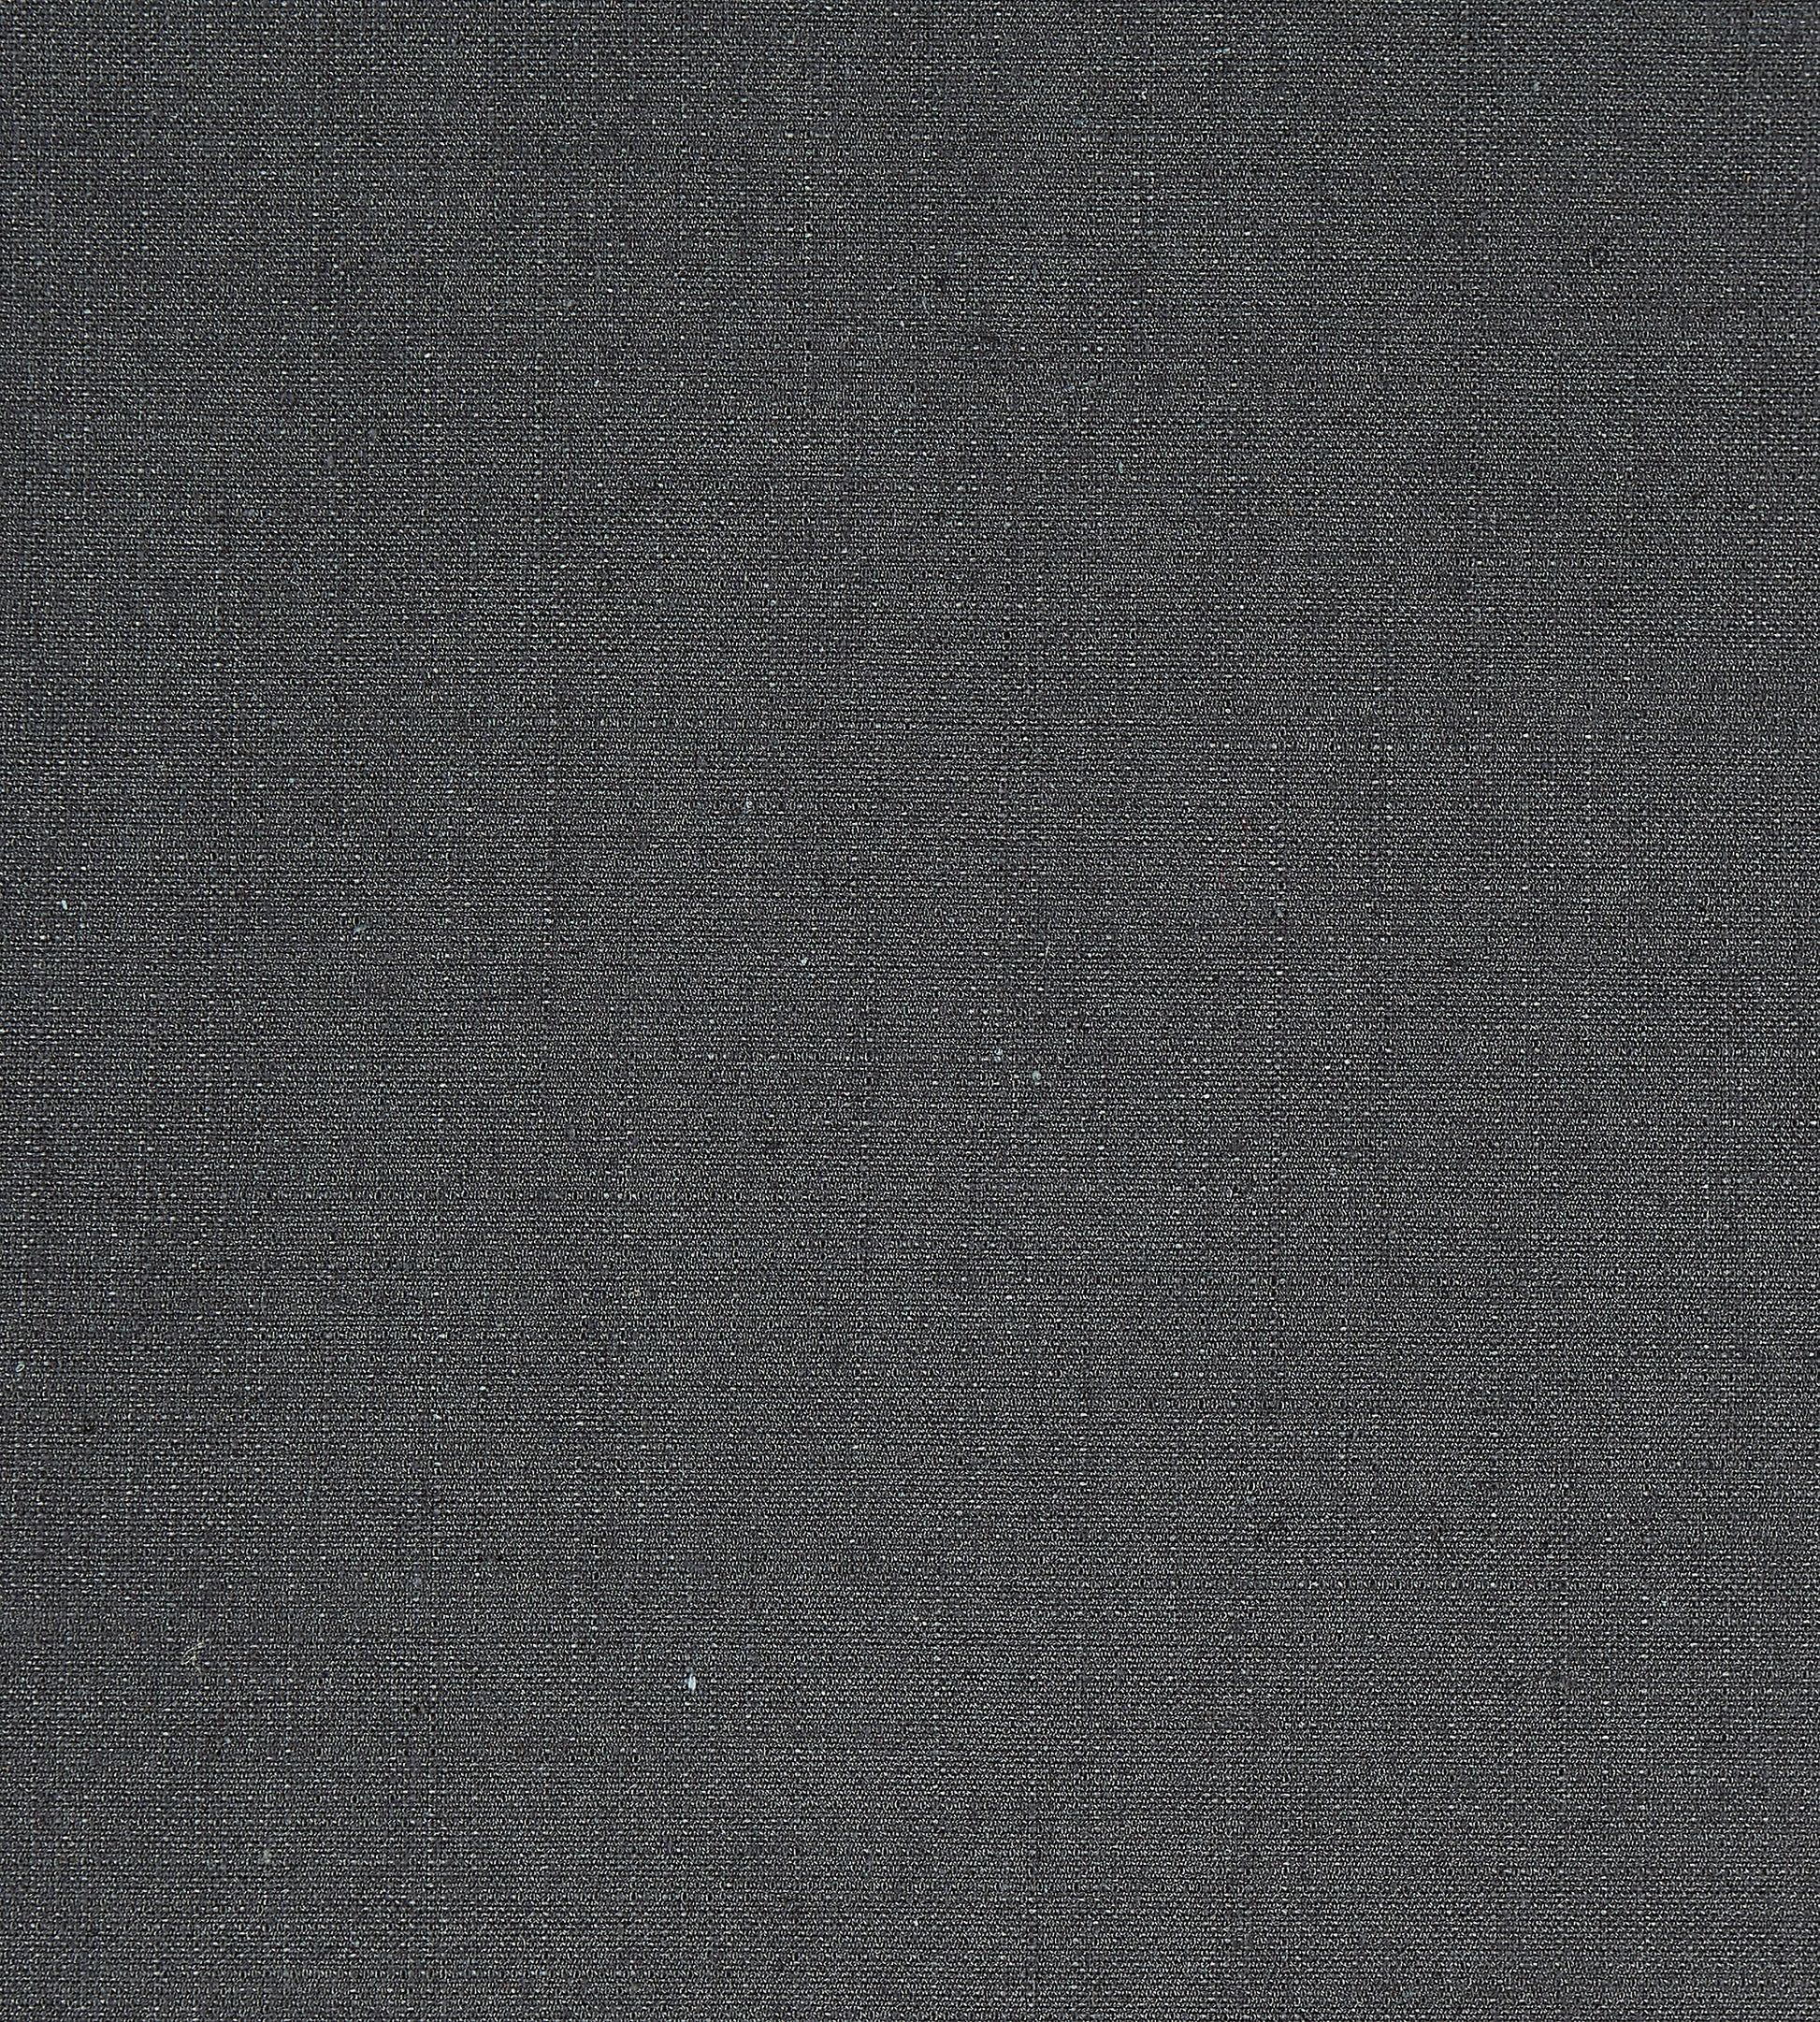 Purchase Boris Kroll Fabric Product# SC 0008K65106, Hampton Weave Carbon 1